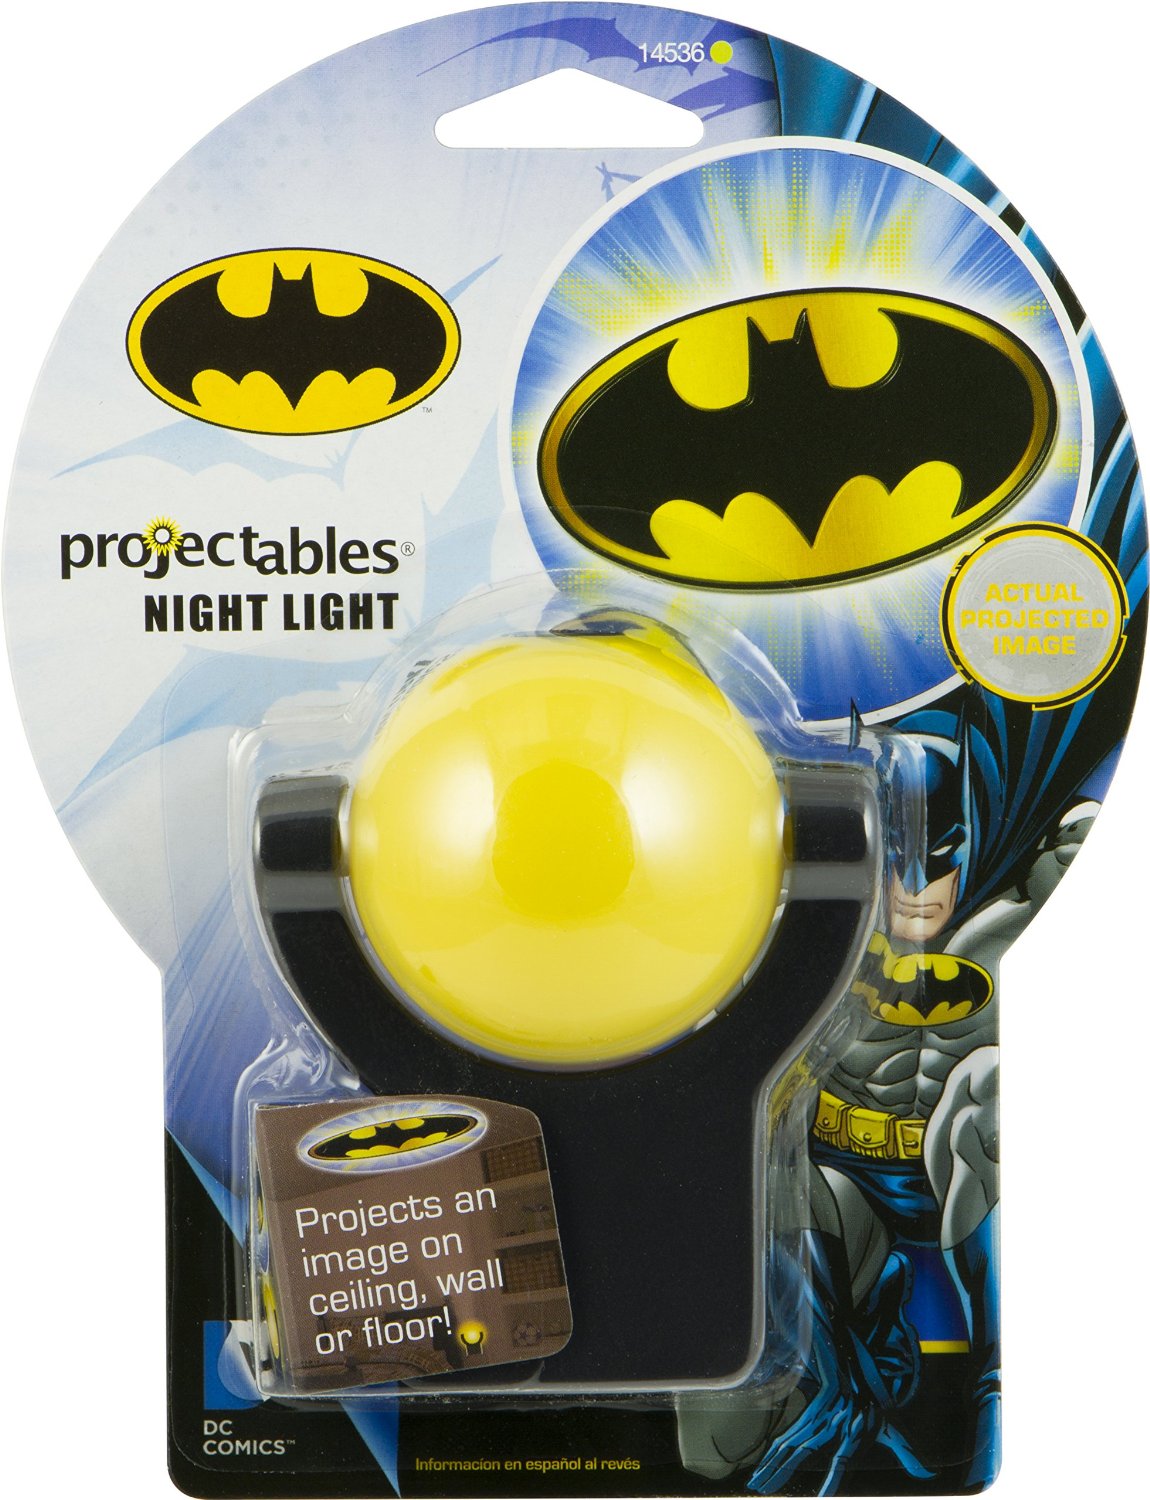 Batman Signal Projector in package